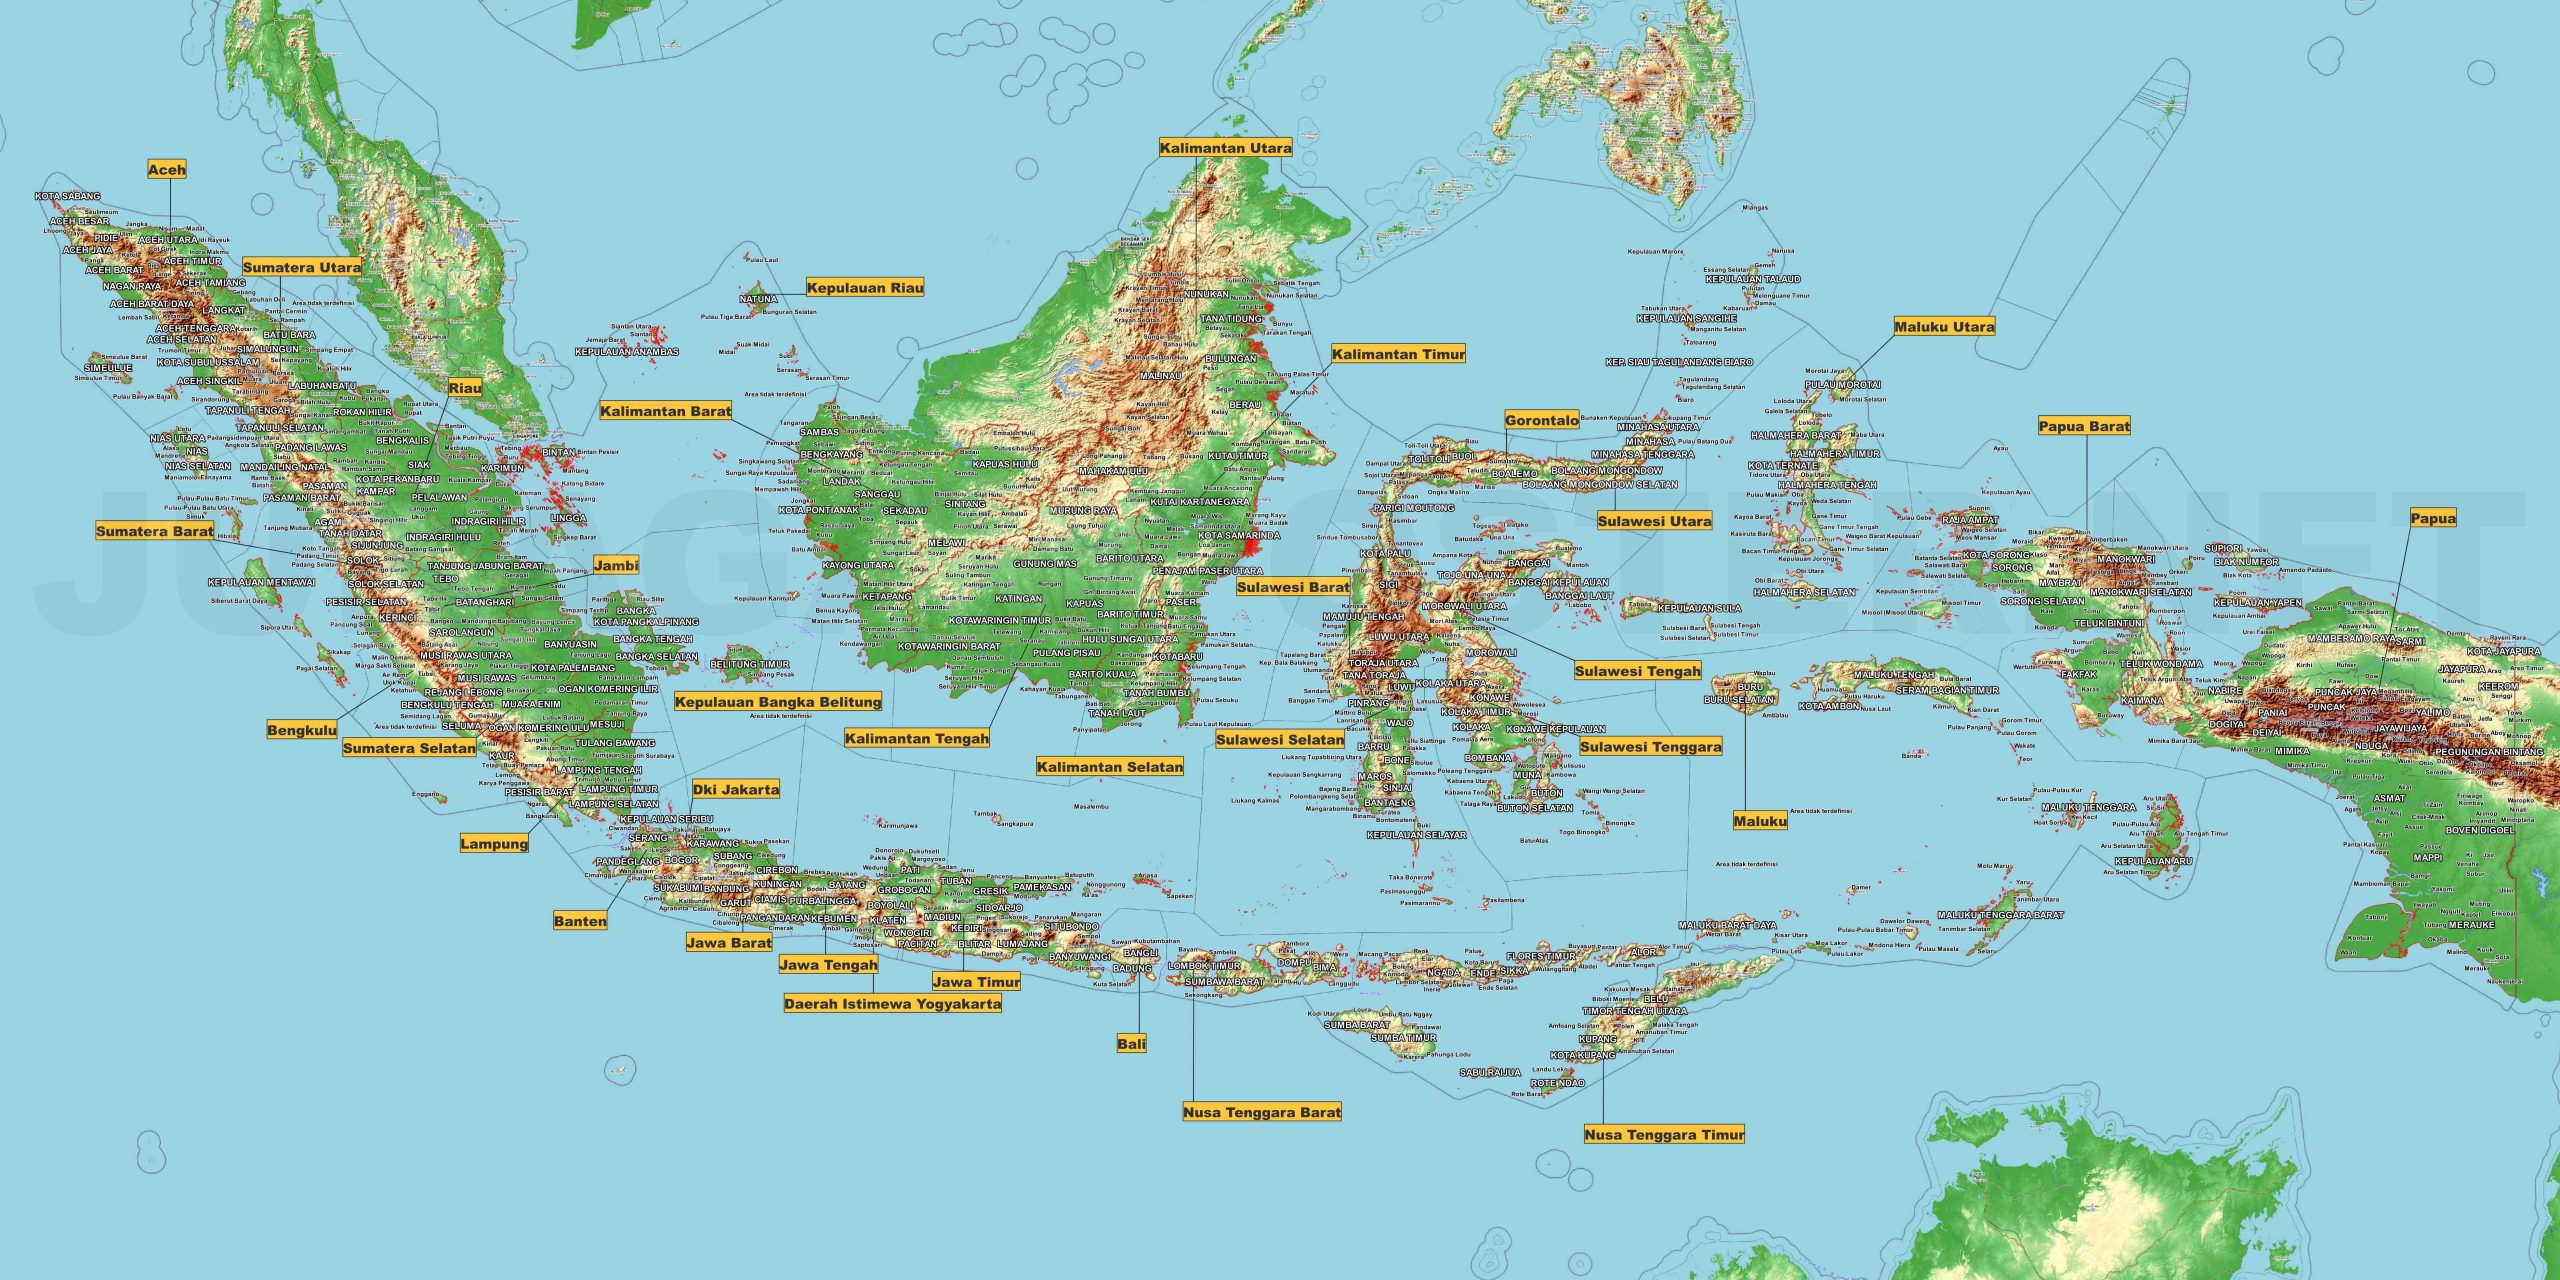 Peta Konsep Terbentuknya Kepulauan Indonesia: Proses Geologis yang Membentuk Nusantara